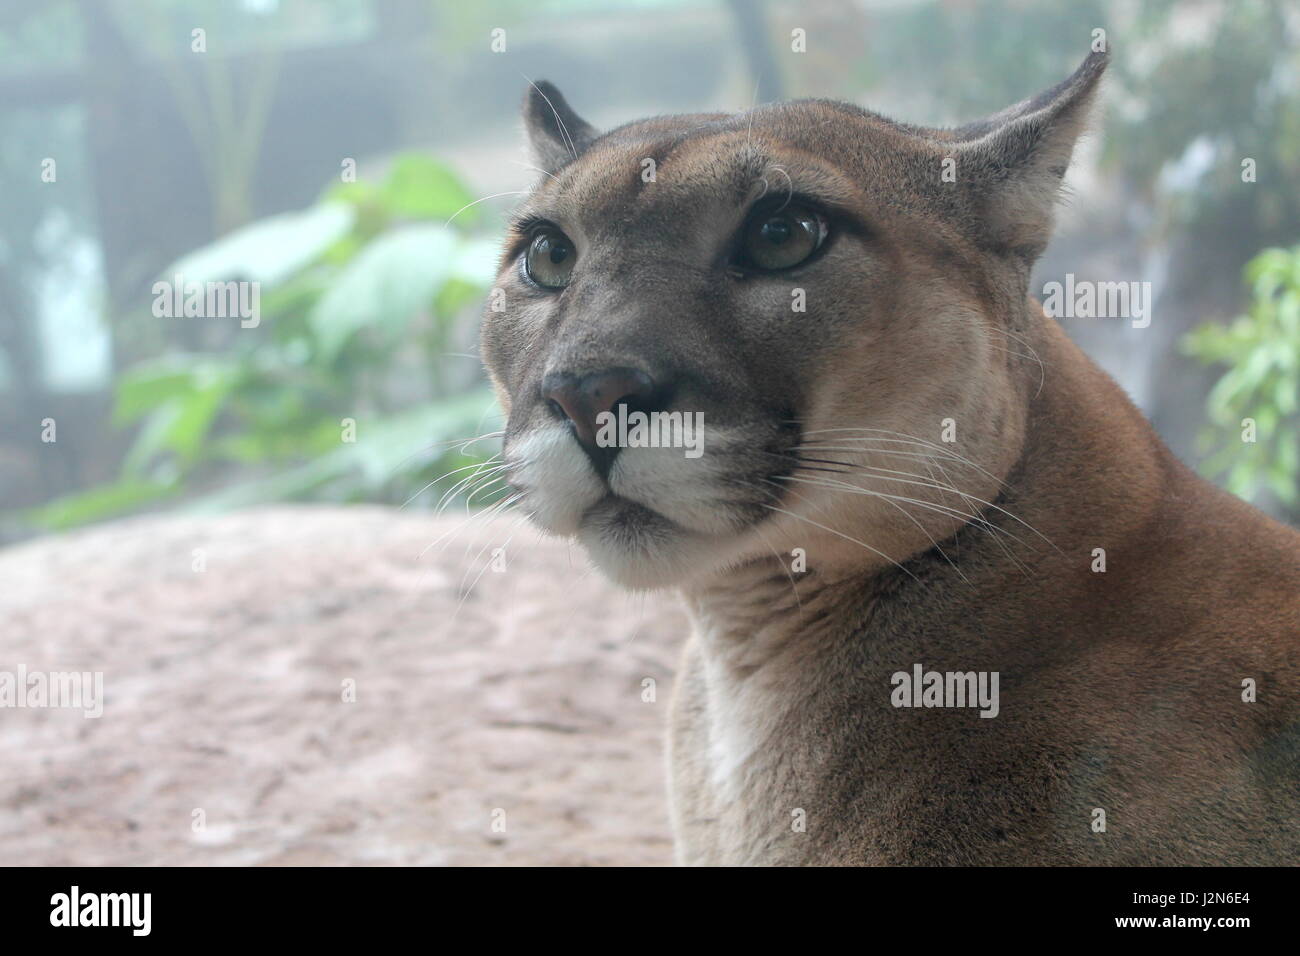 Puma jungle e imágenes de alta resolución - Alamy